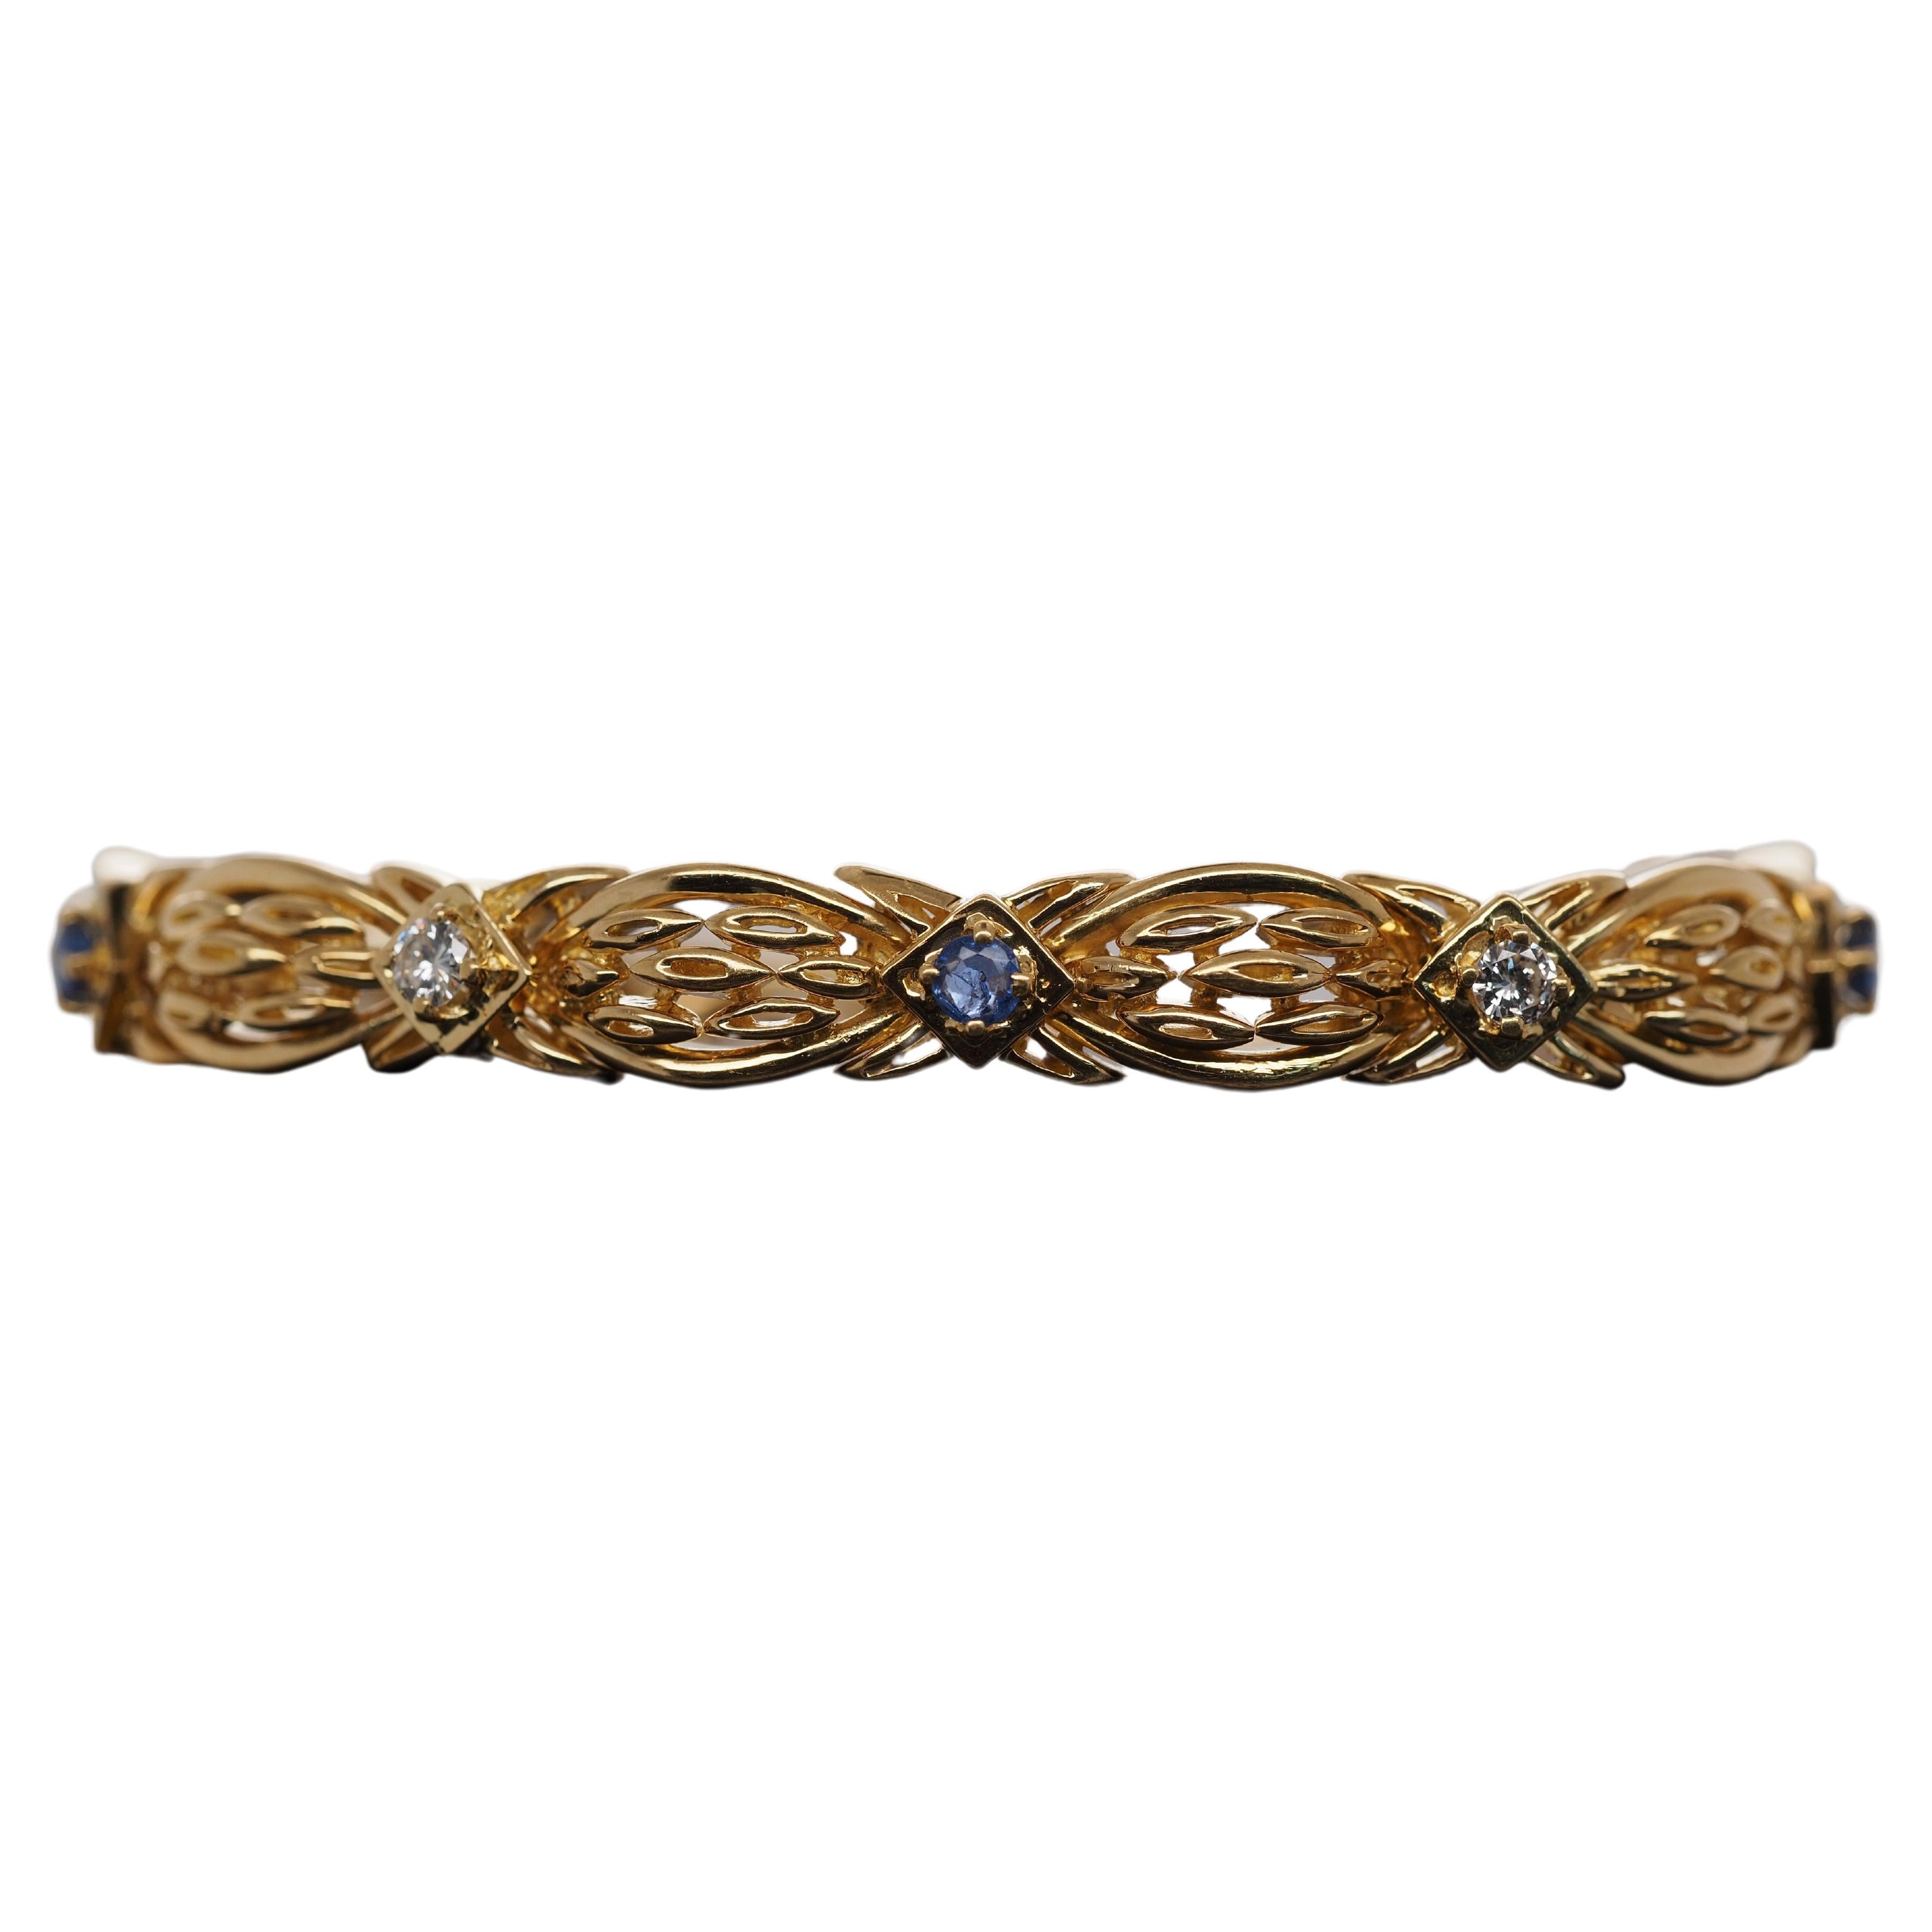 Vintage Tiffany & Co 18k Diamond and Sapphire Bracelet